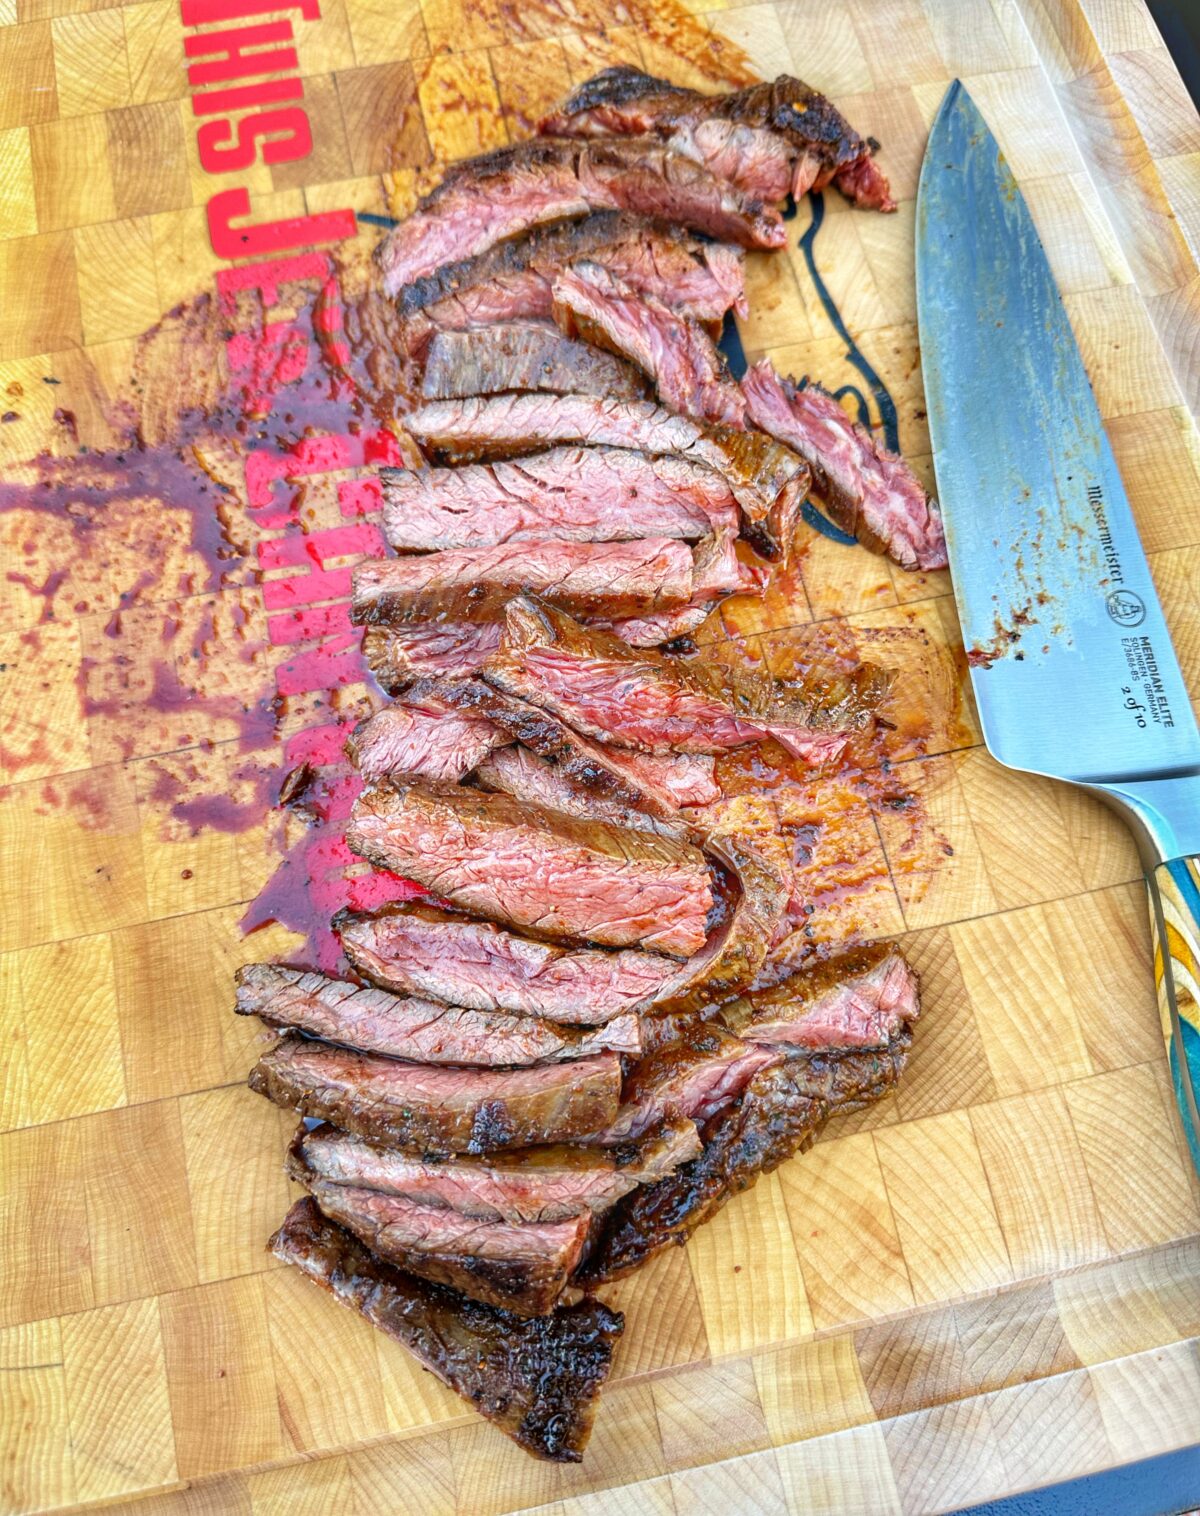 Medium rare steak slices on a cutting board.